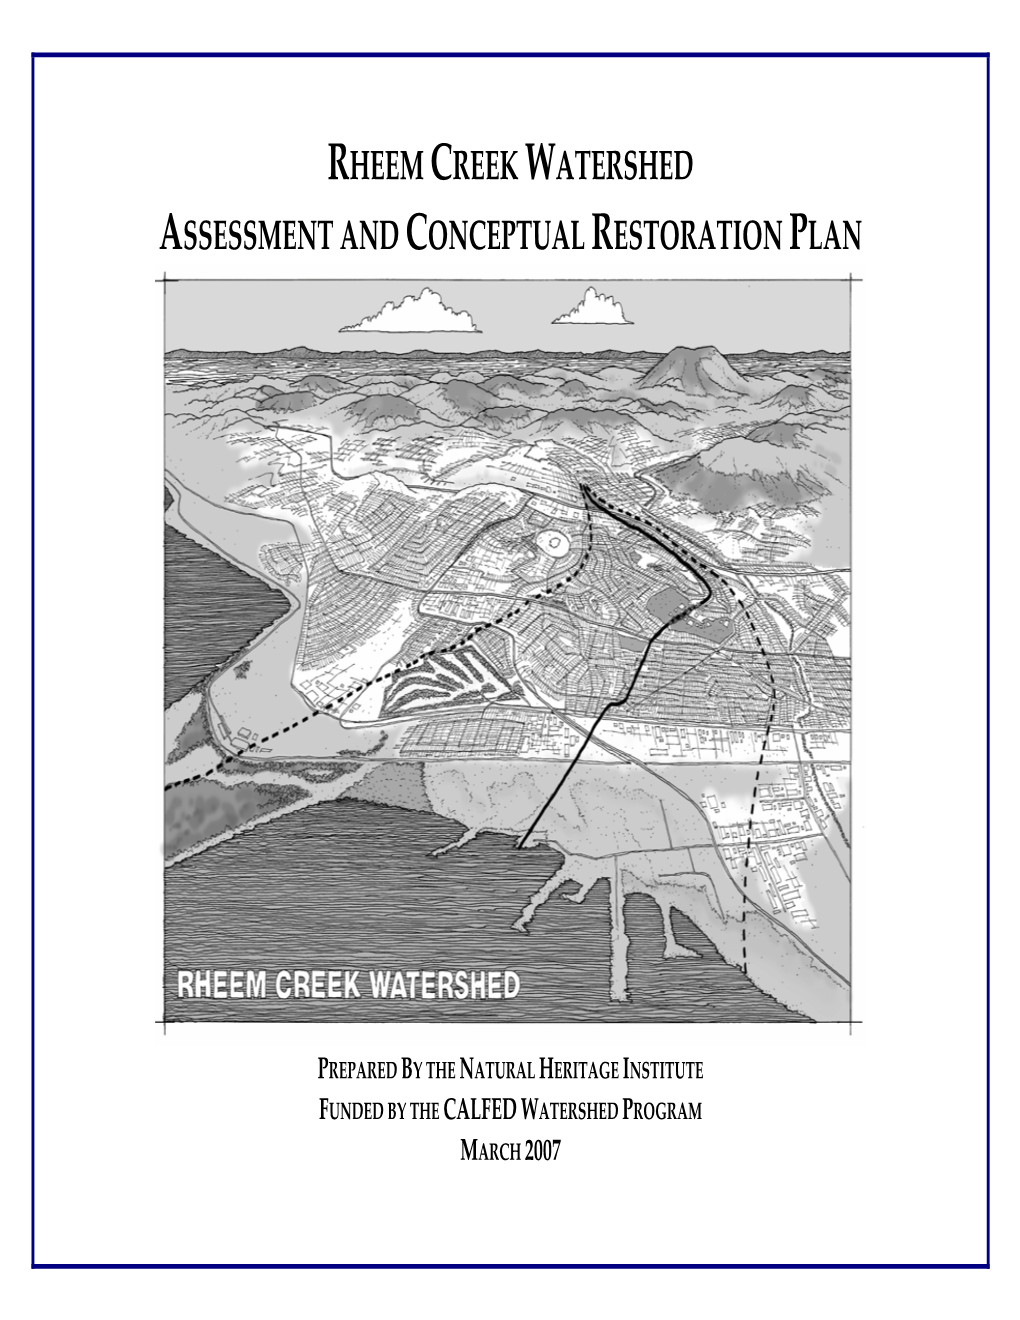 Rheem Creek Watershed Assessment and Conceptual Restoration Plan